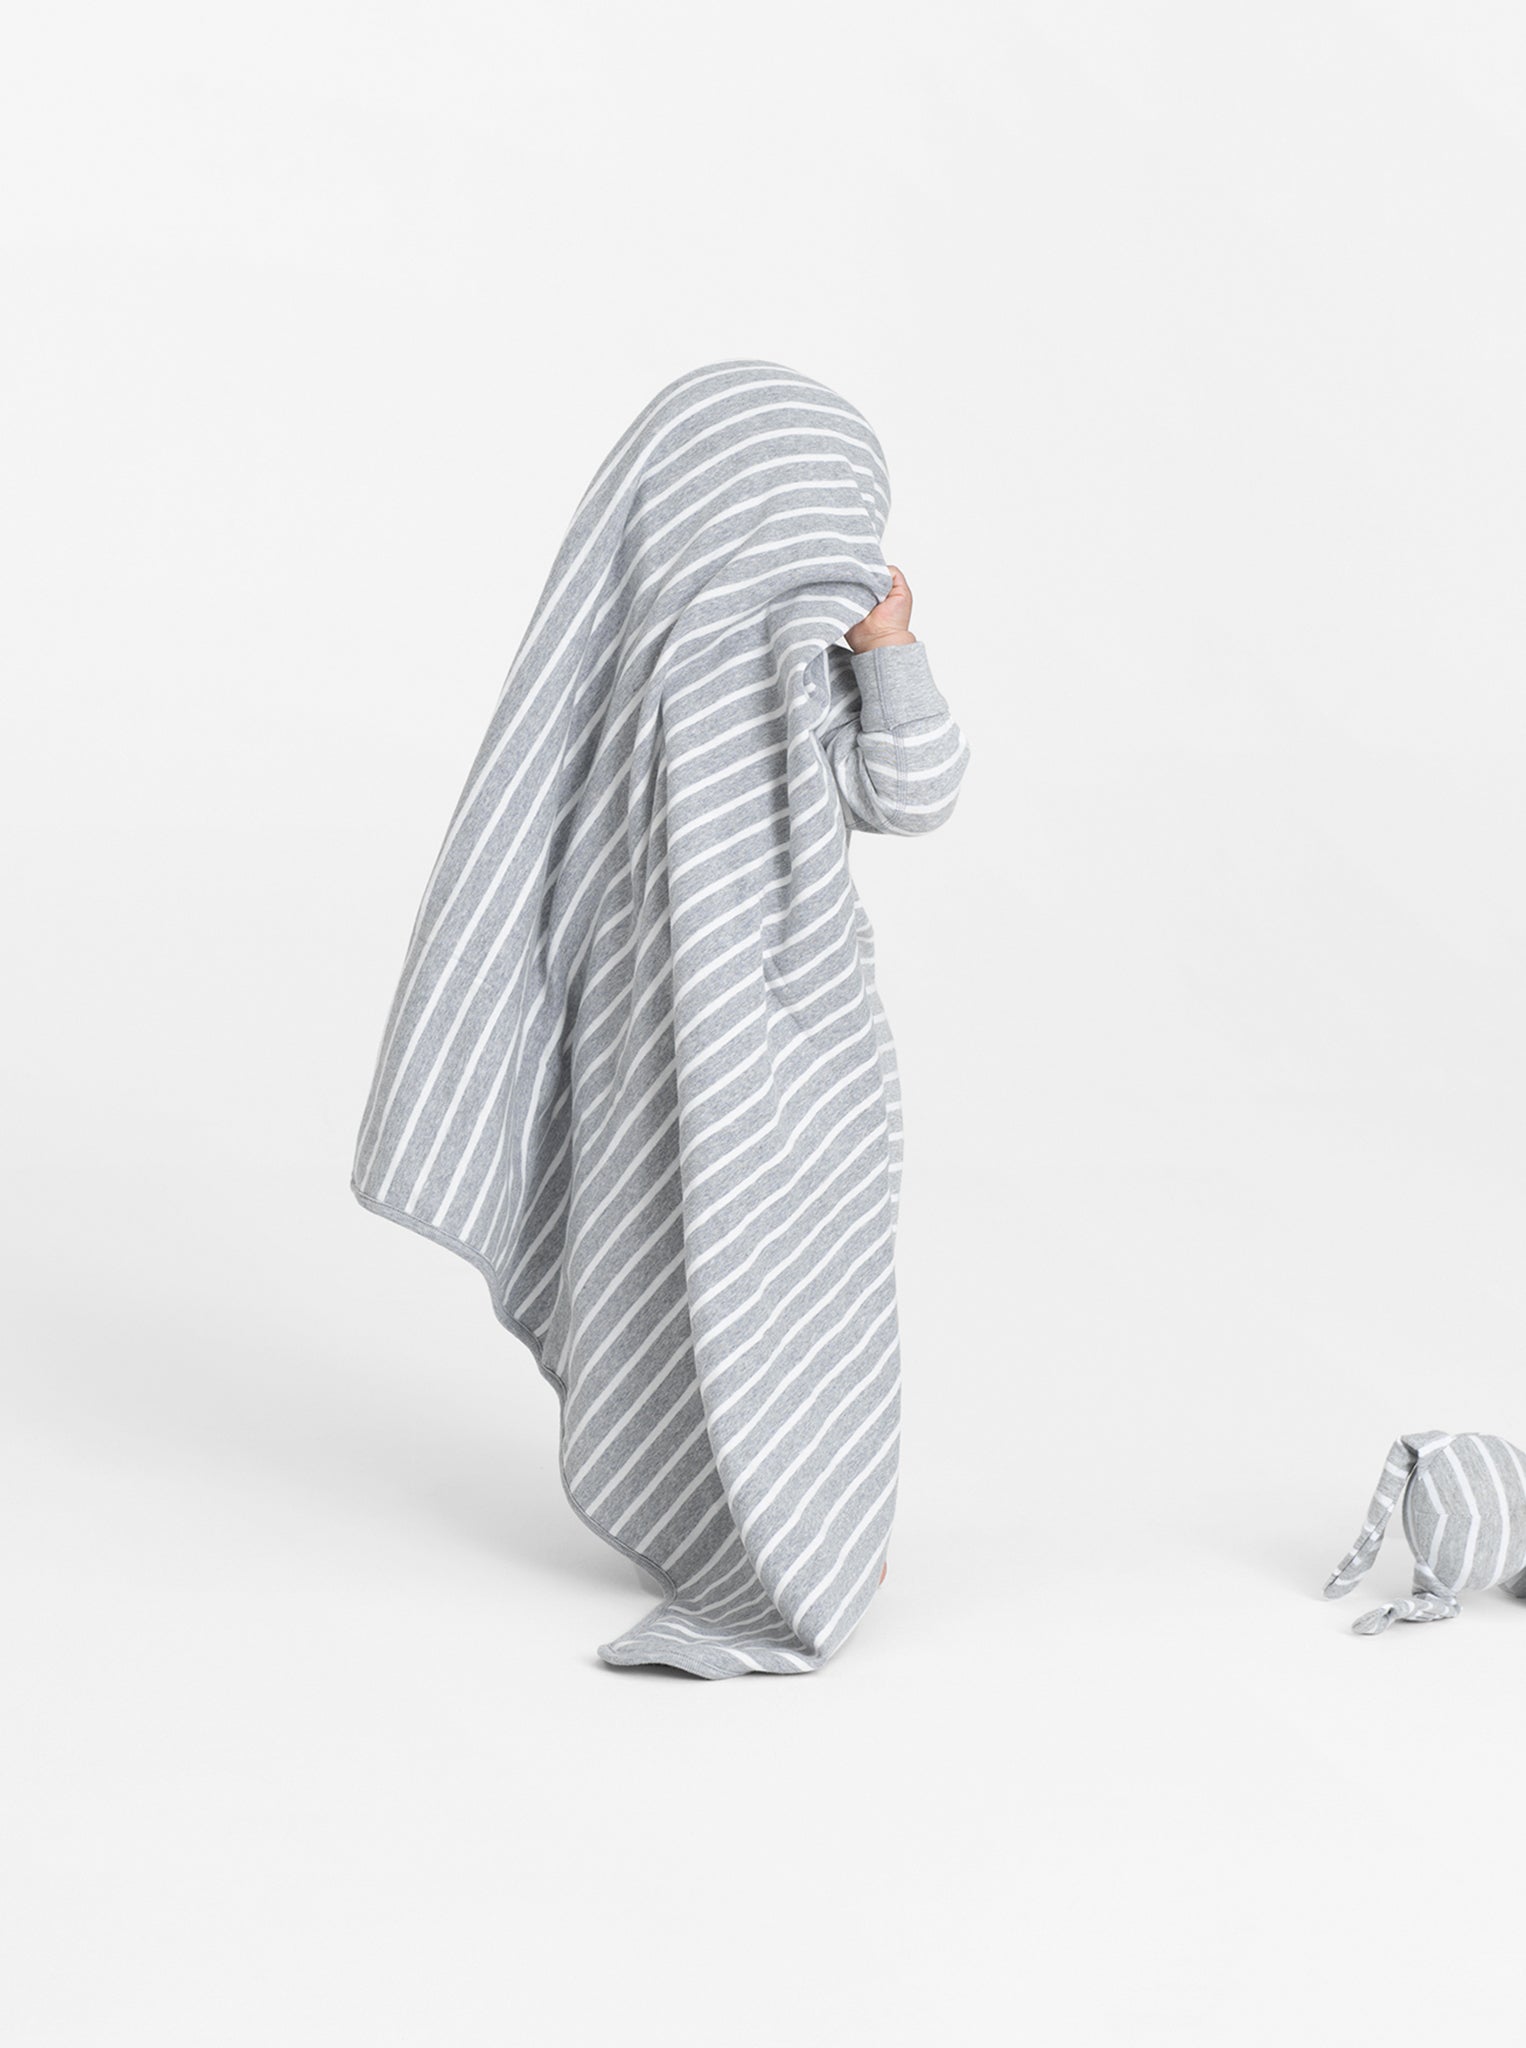 PO.P Stripe Kids Blanket/Shawl